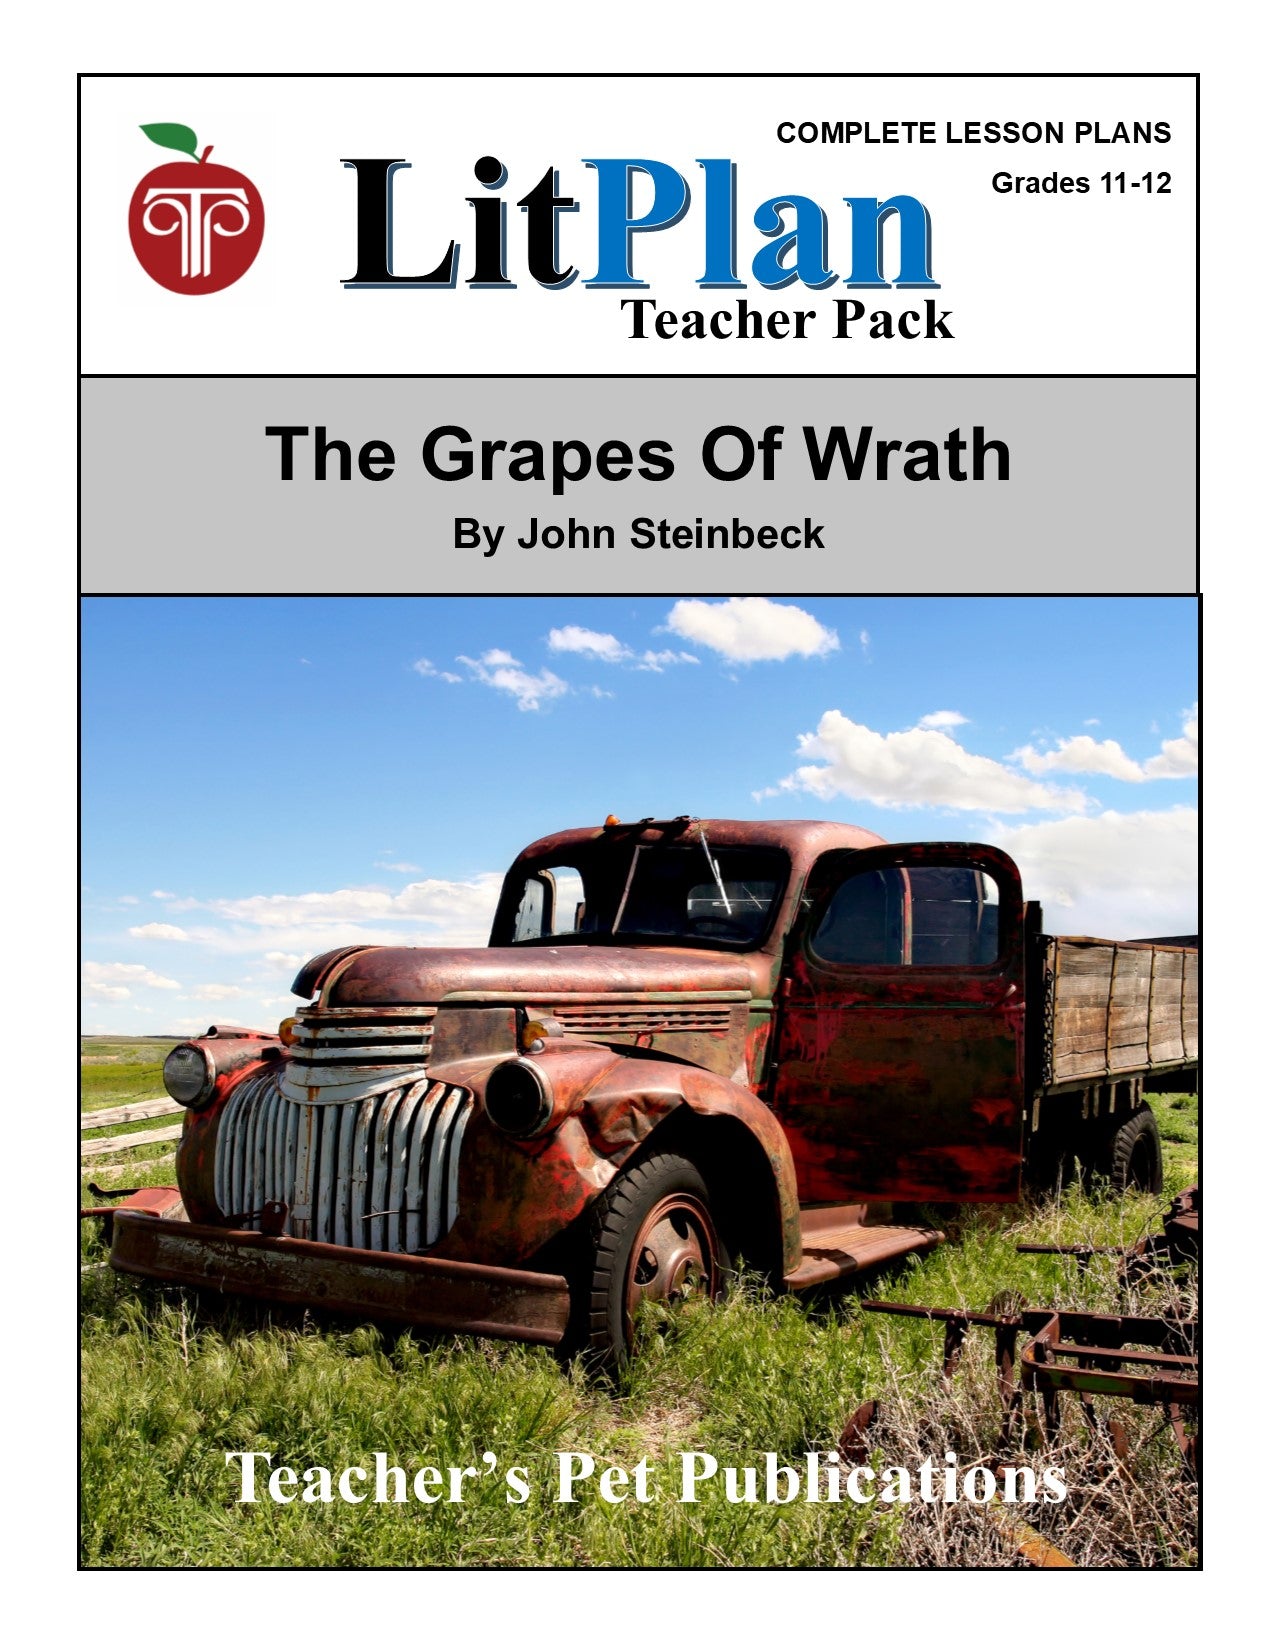 The Grapes of Wrath: LitPlan Teacher Pack Grades 11-12